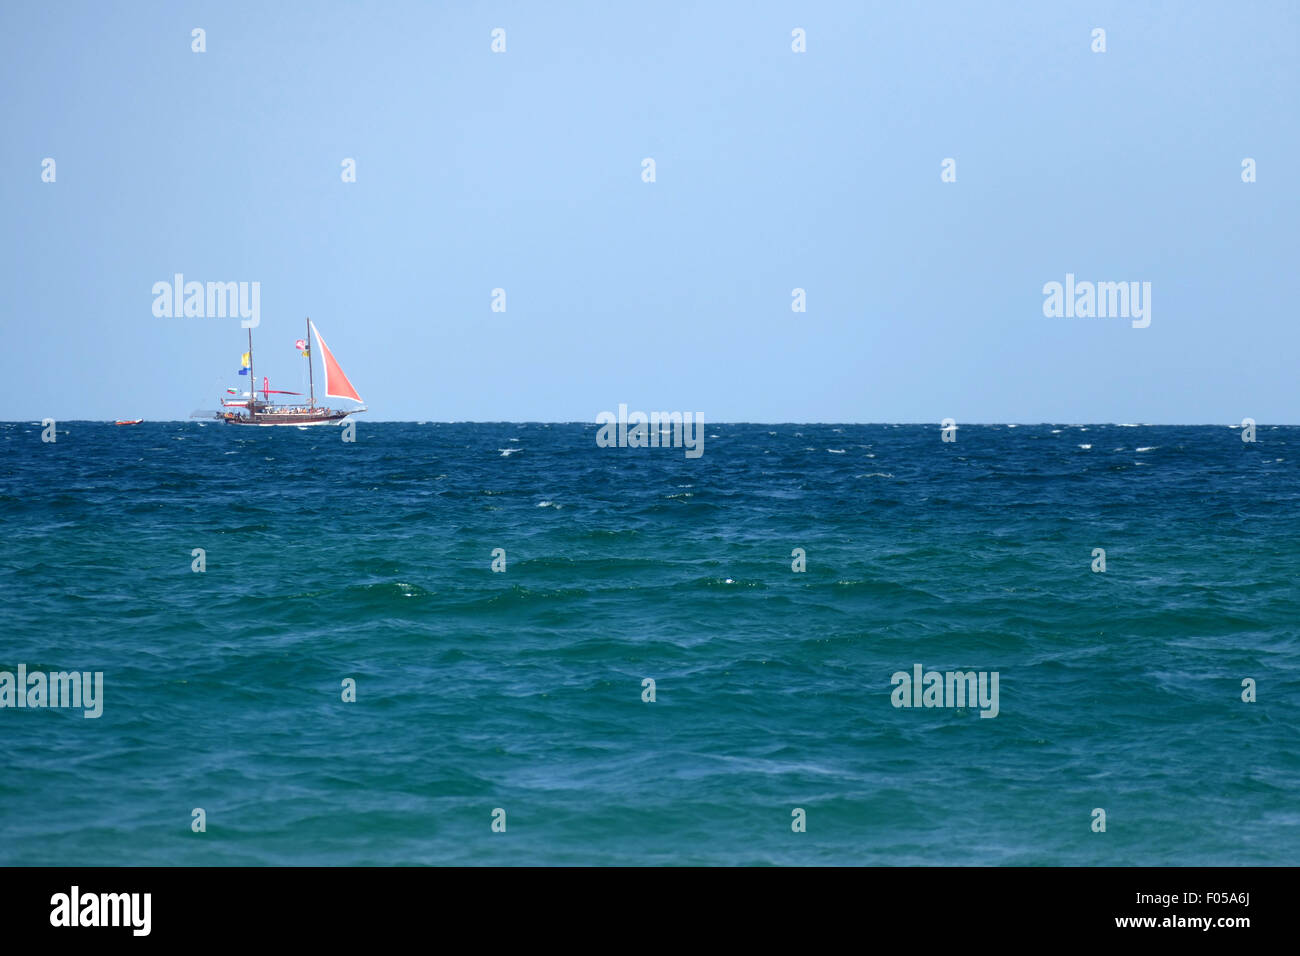 Sailboat on the horizon. Stock Photo